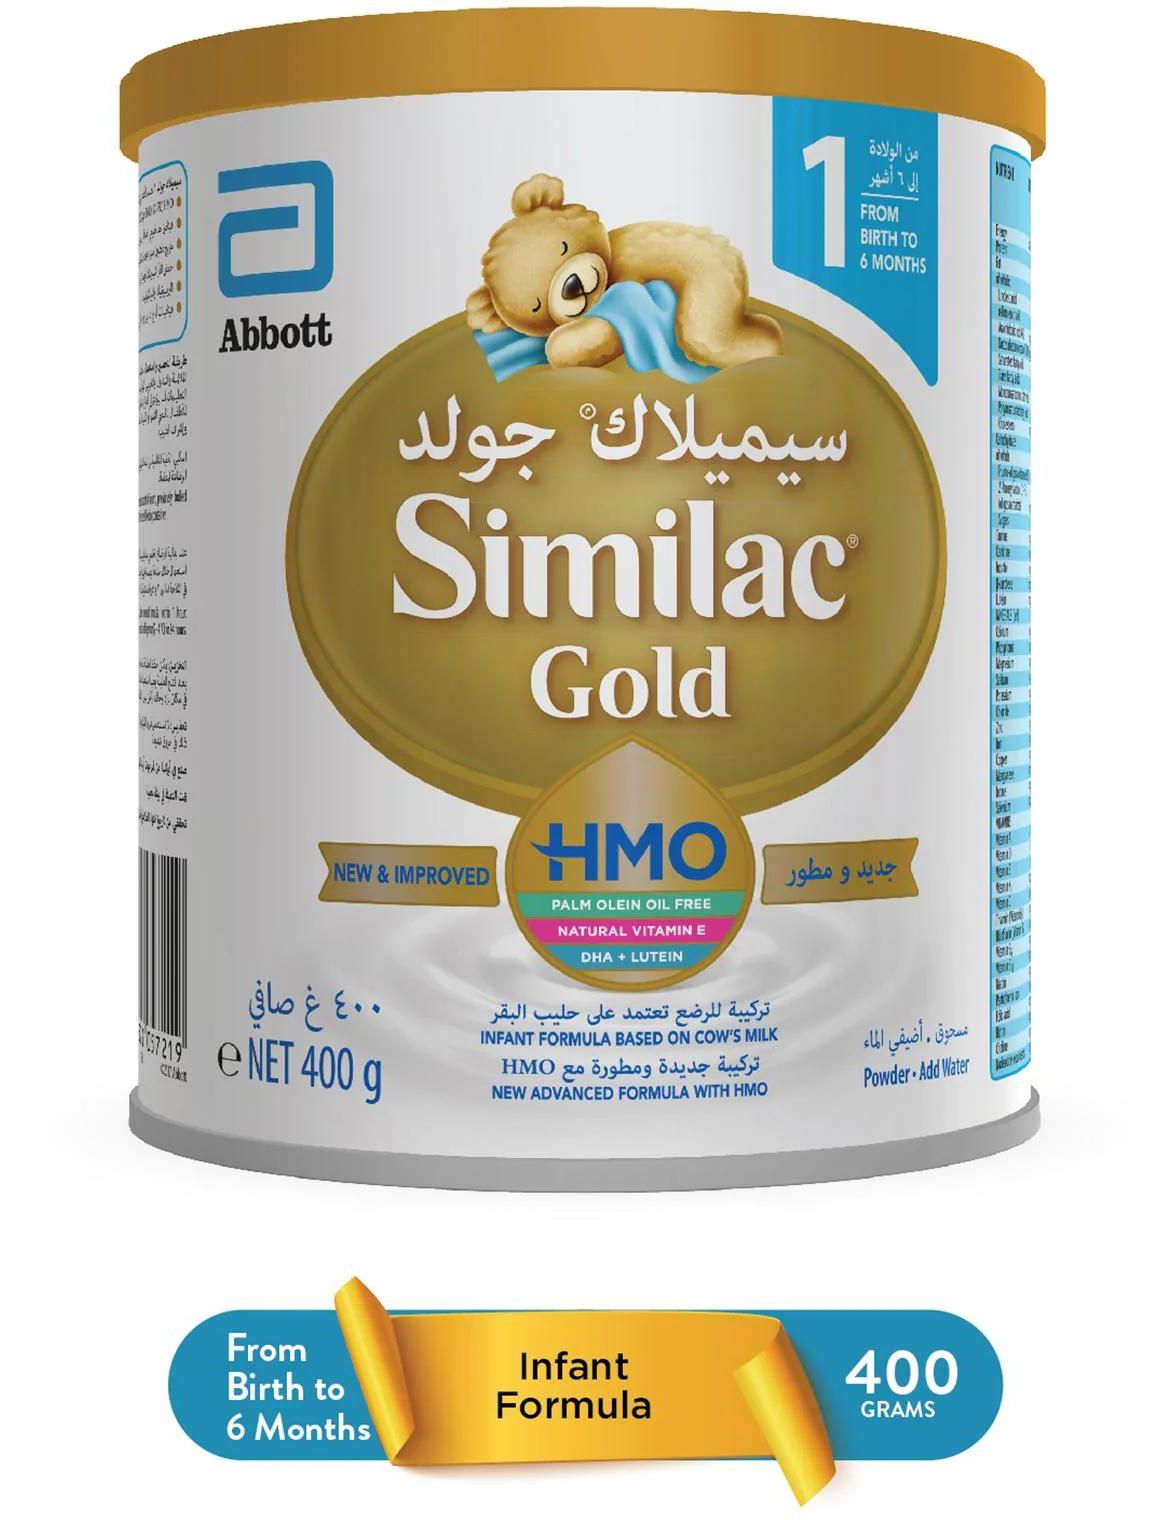 Similac gold 1 infant milk 400 g